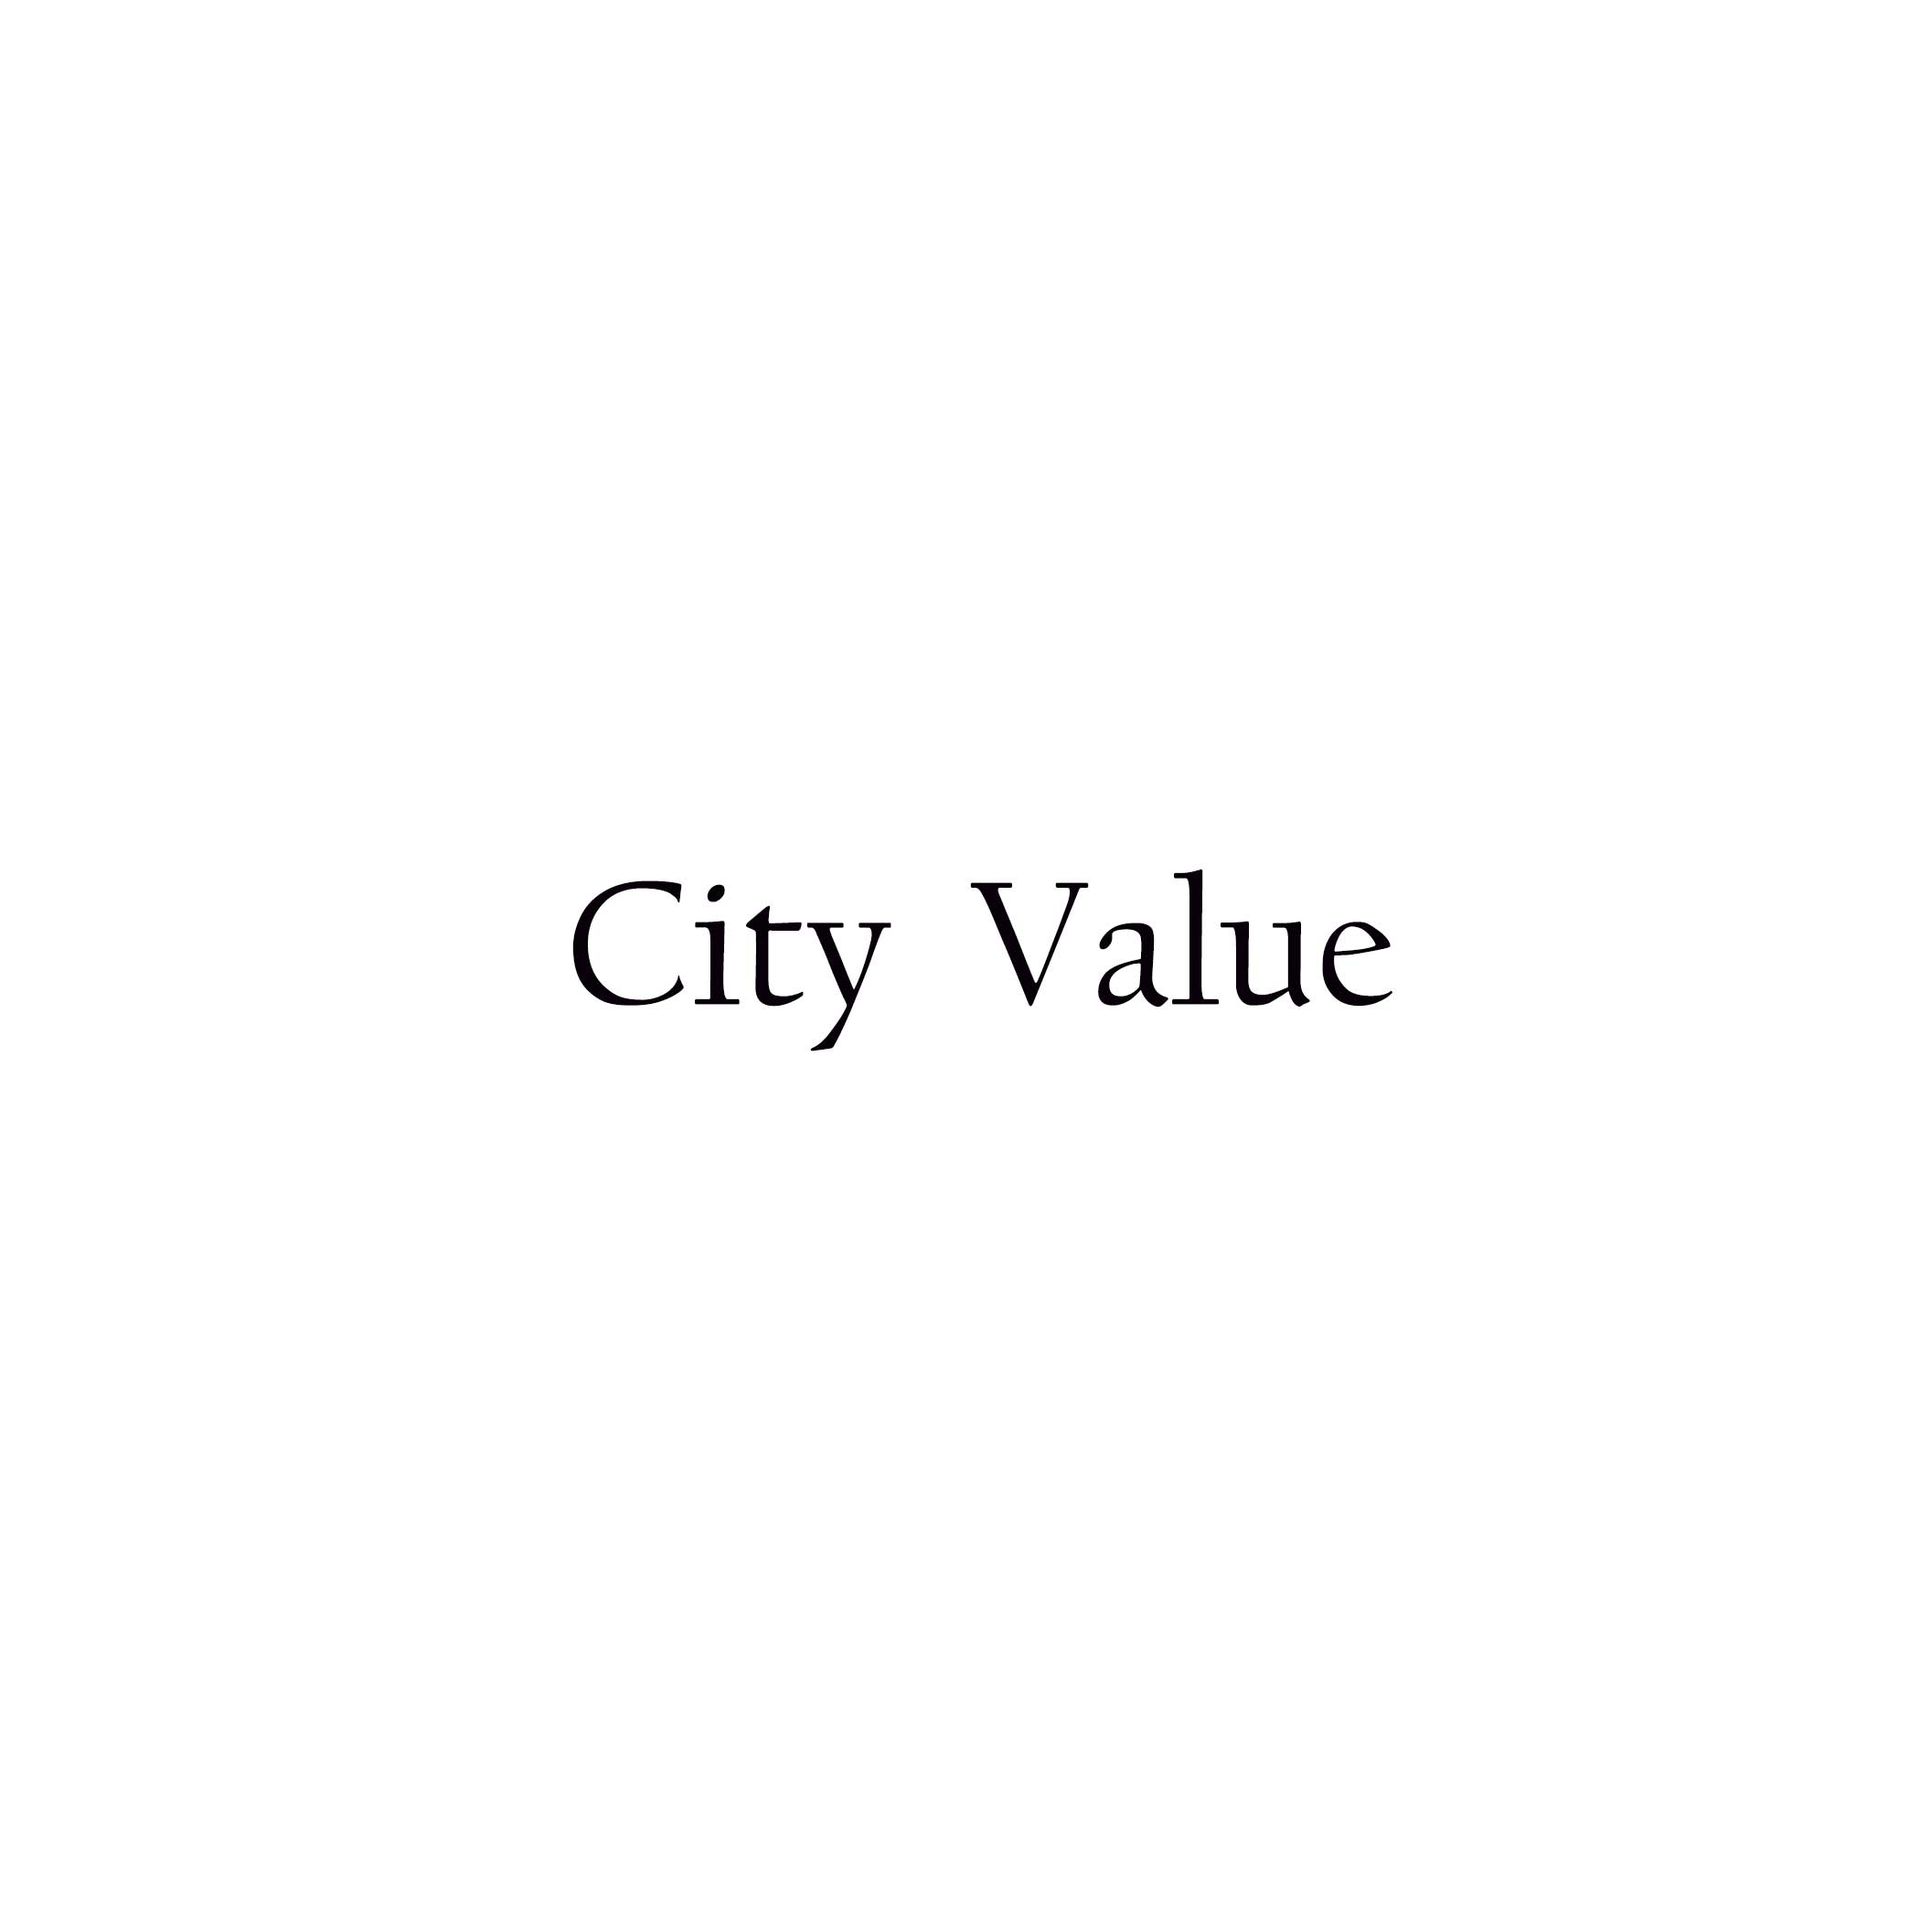 City Value